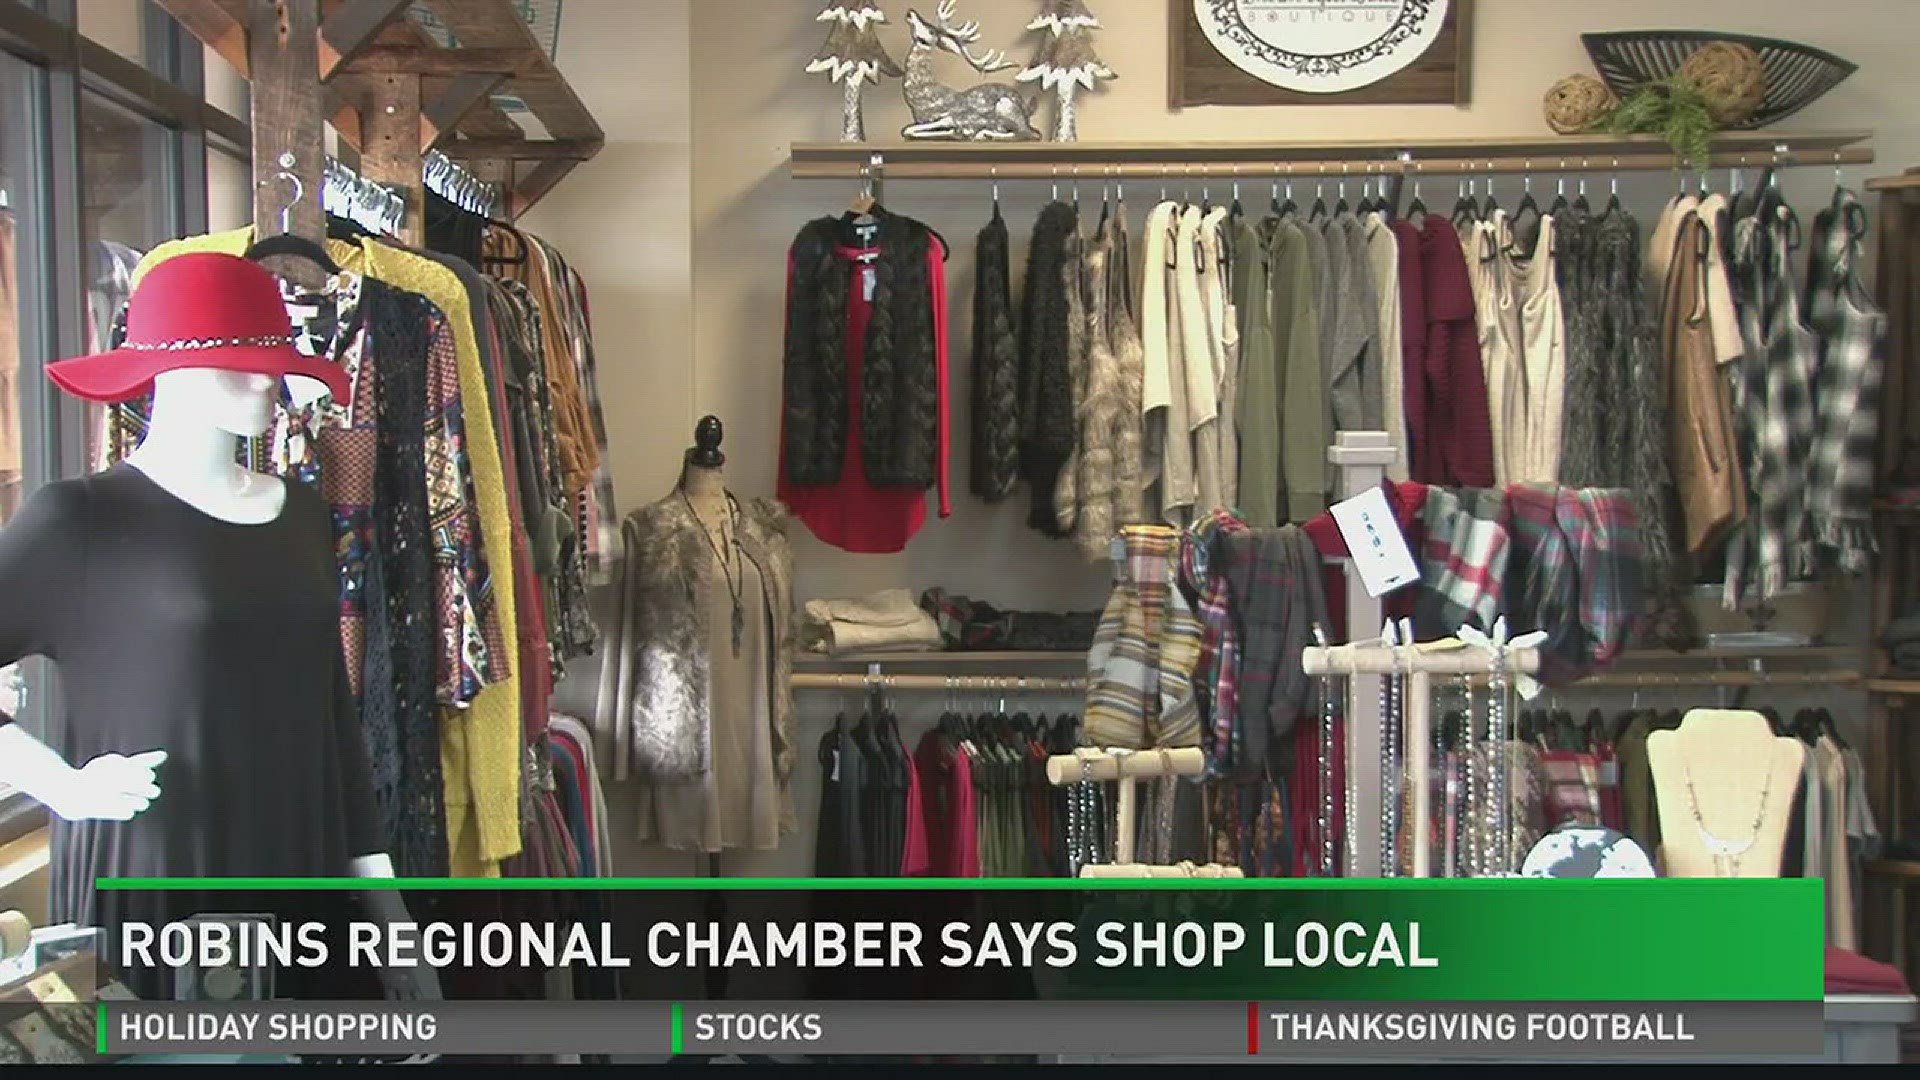 Robins Regional Chamber says shop local